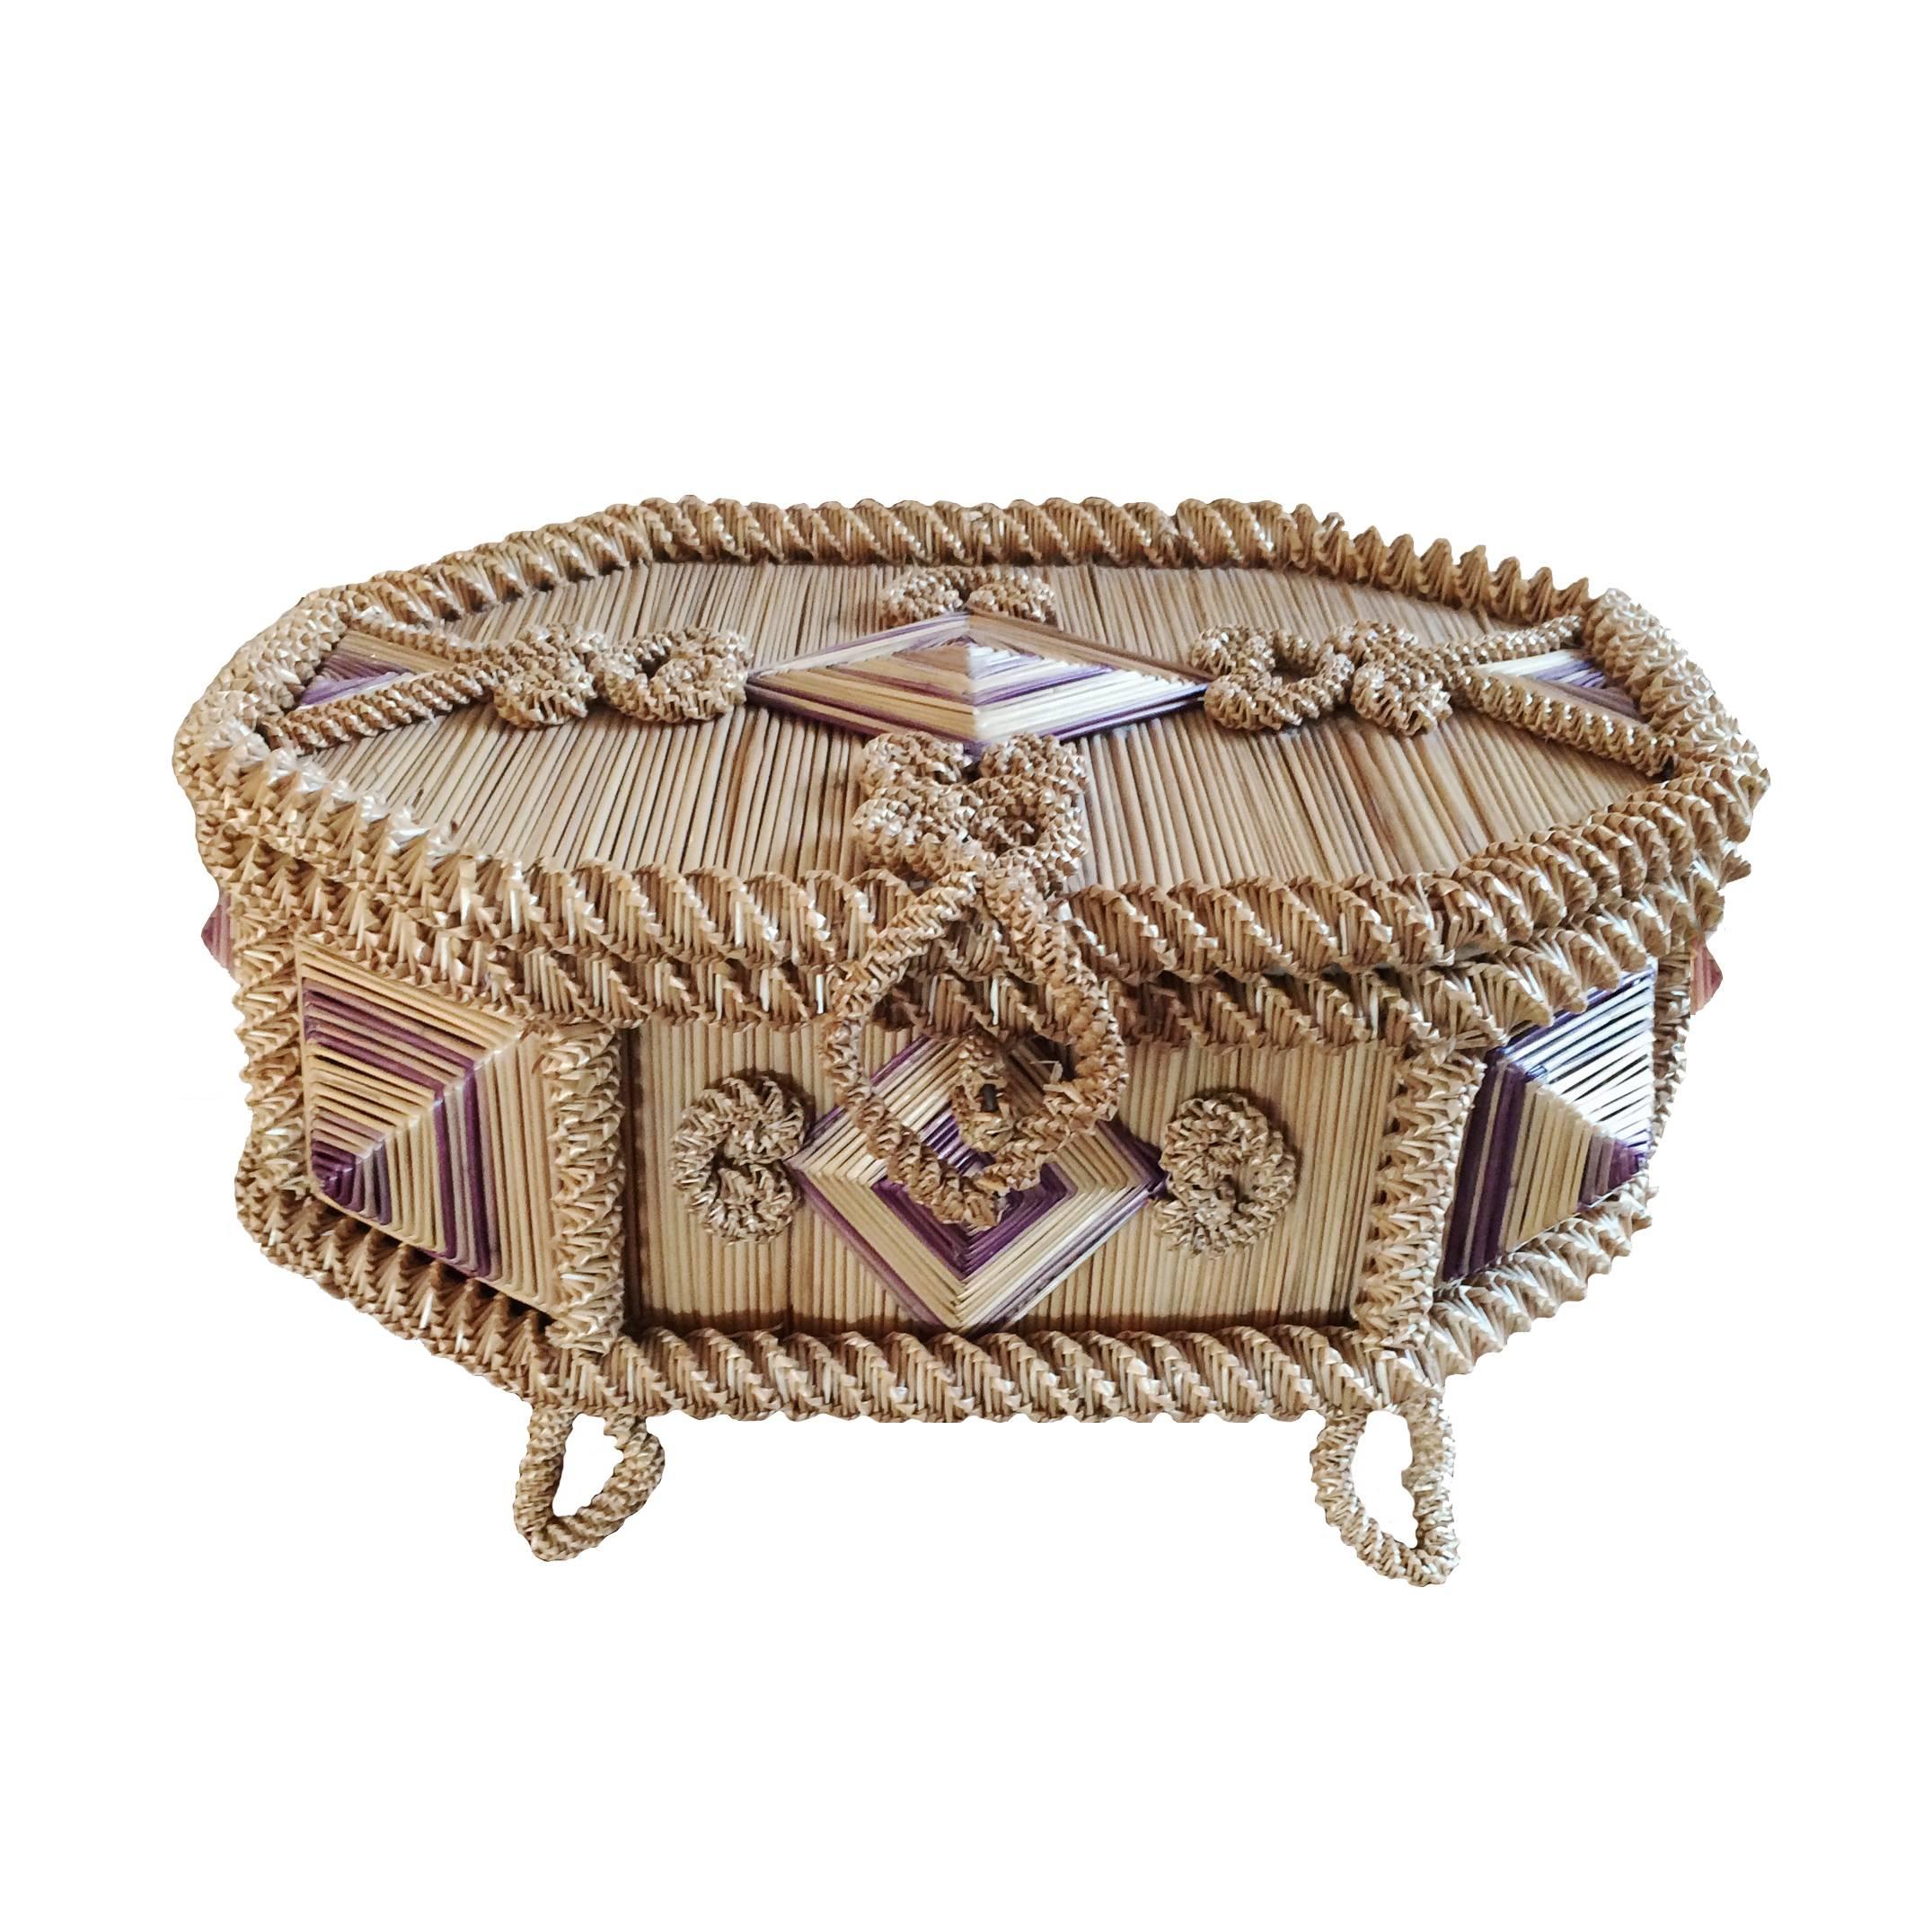 19th Century French Straw Applique Box